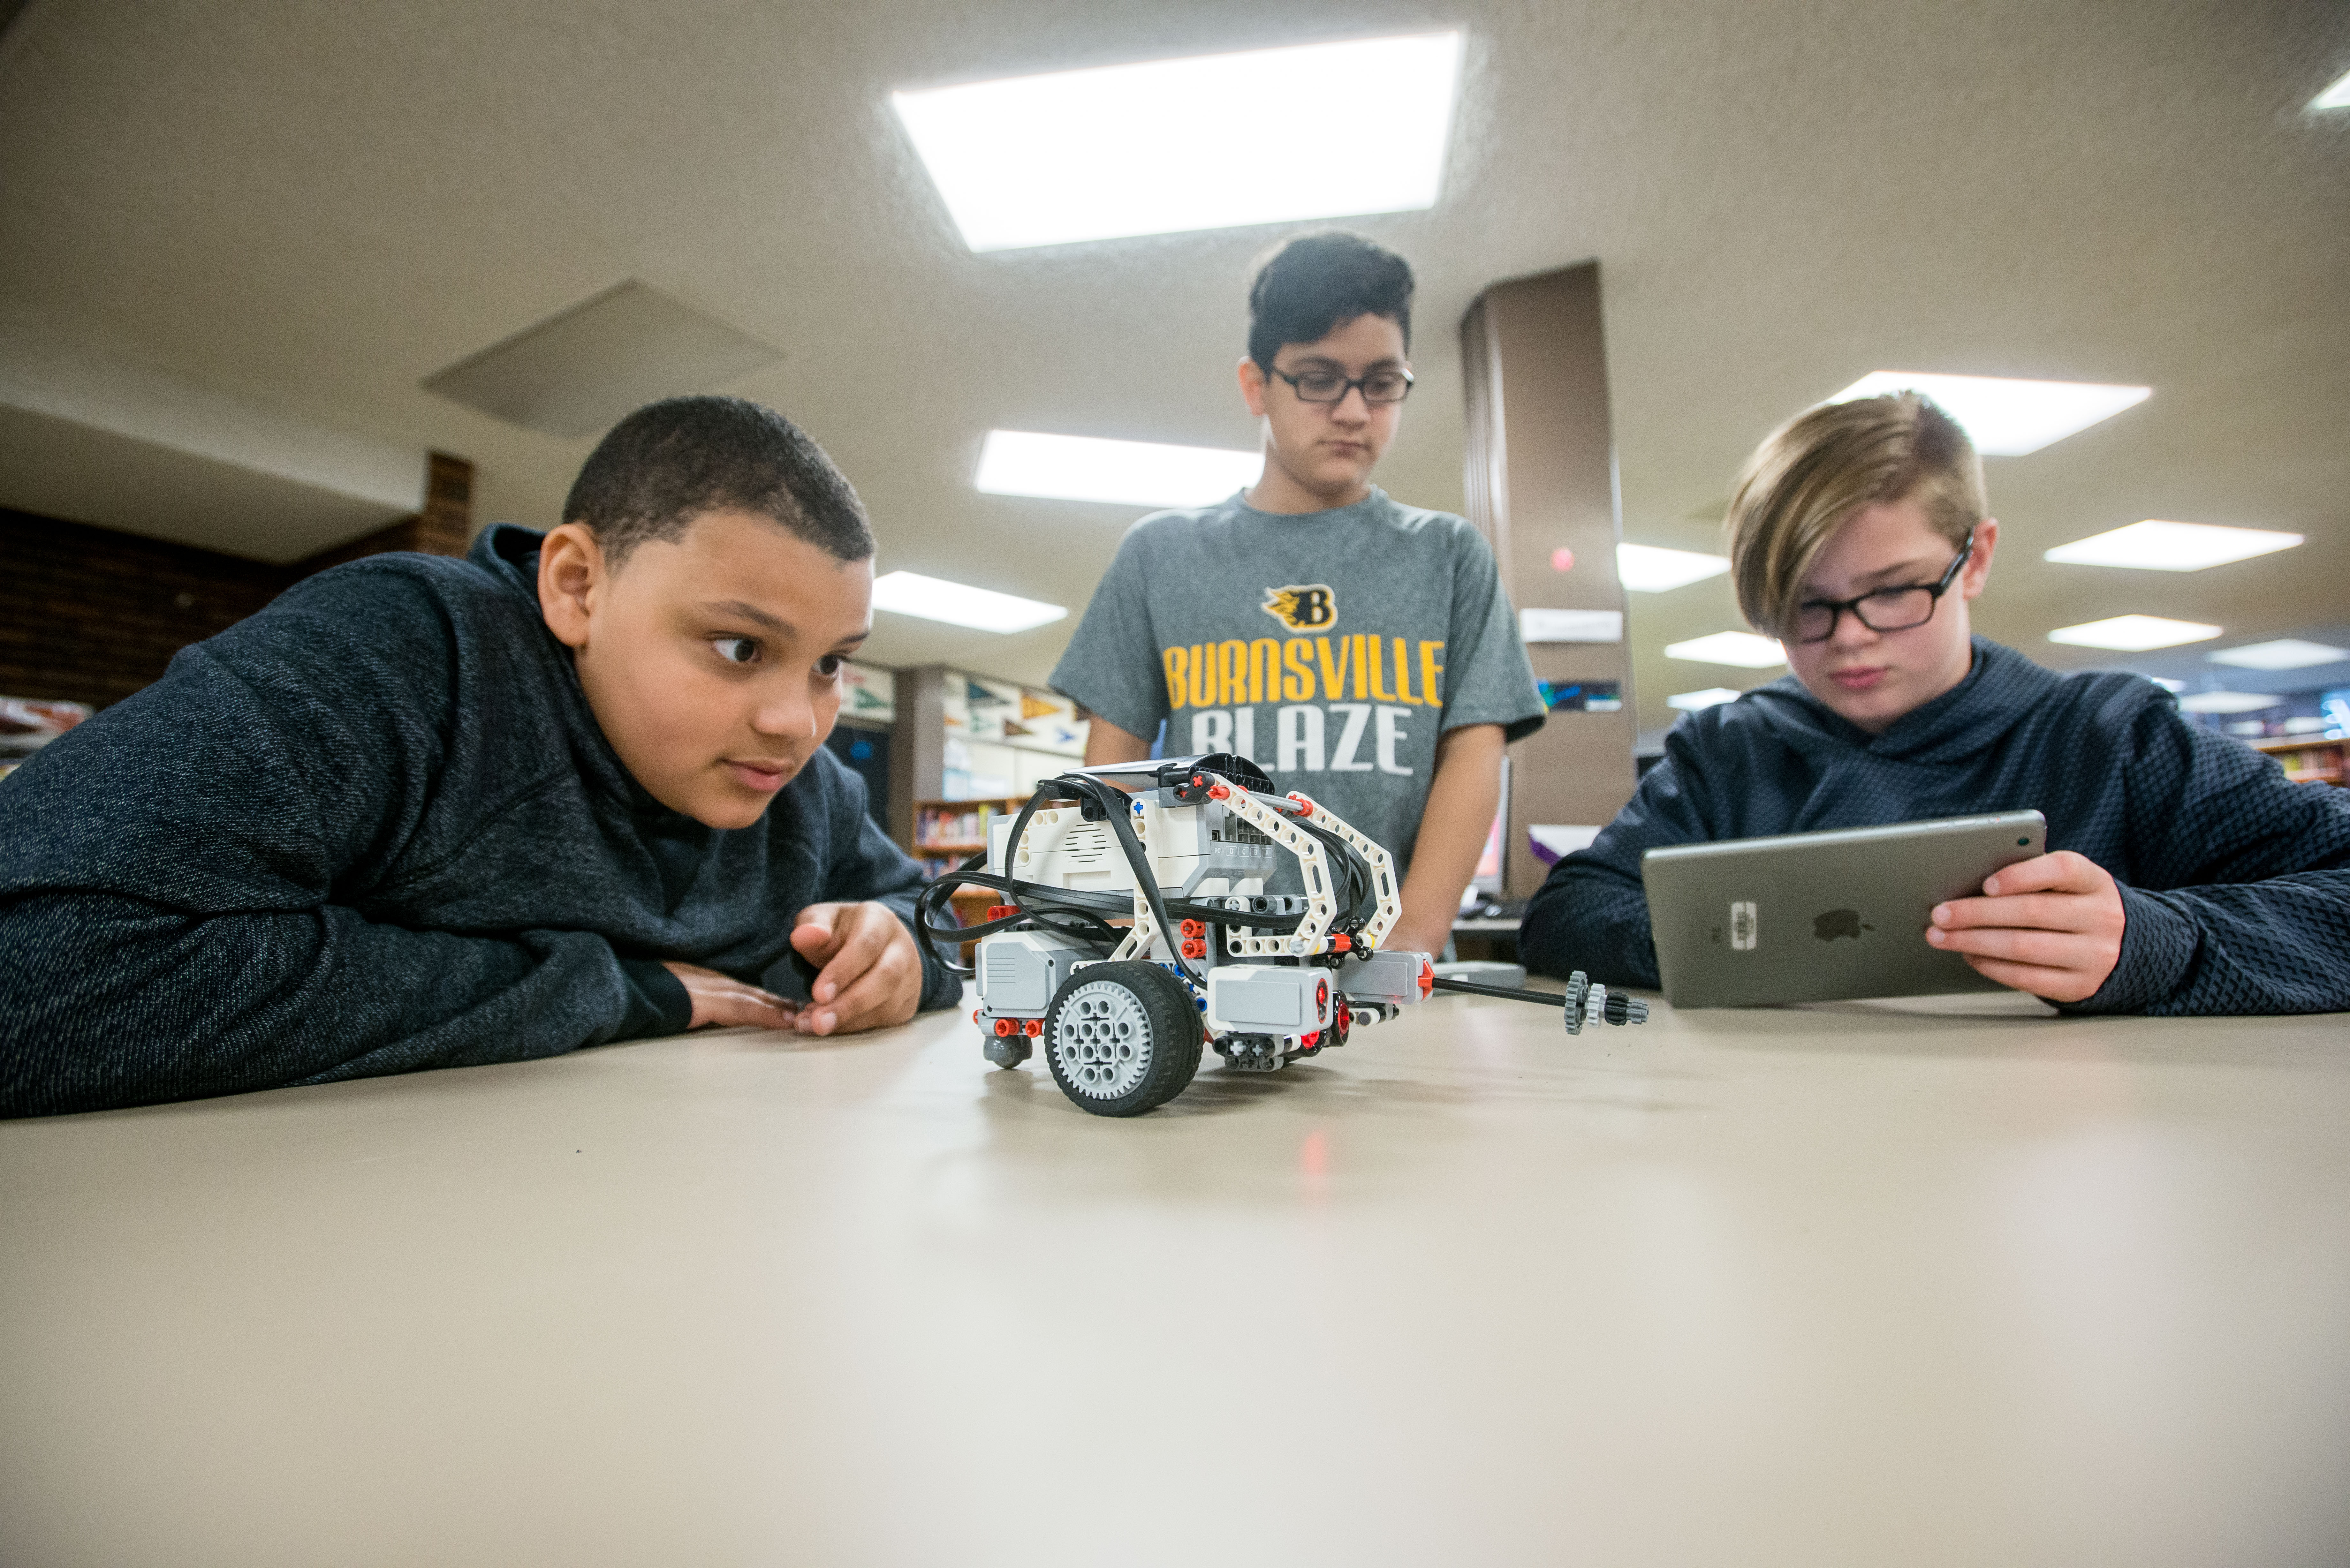 Students in Minnesota’s Burnsville-Egan-Savage School District get embedded coding instruction in career pathway programs. 